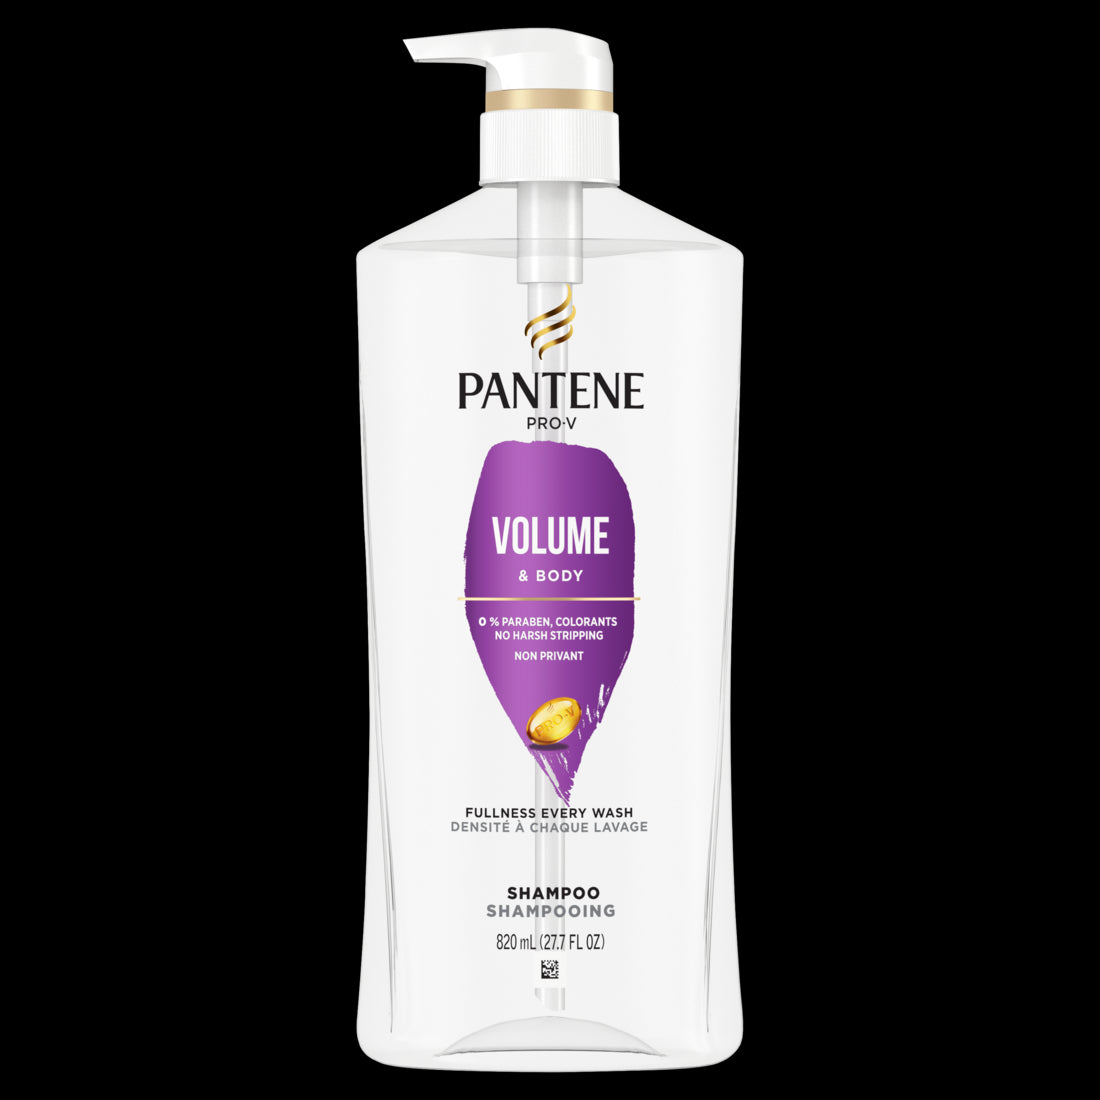 PANTENE PRO-V Volume & Body Shampoo, 27.7oz/820mL